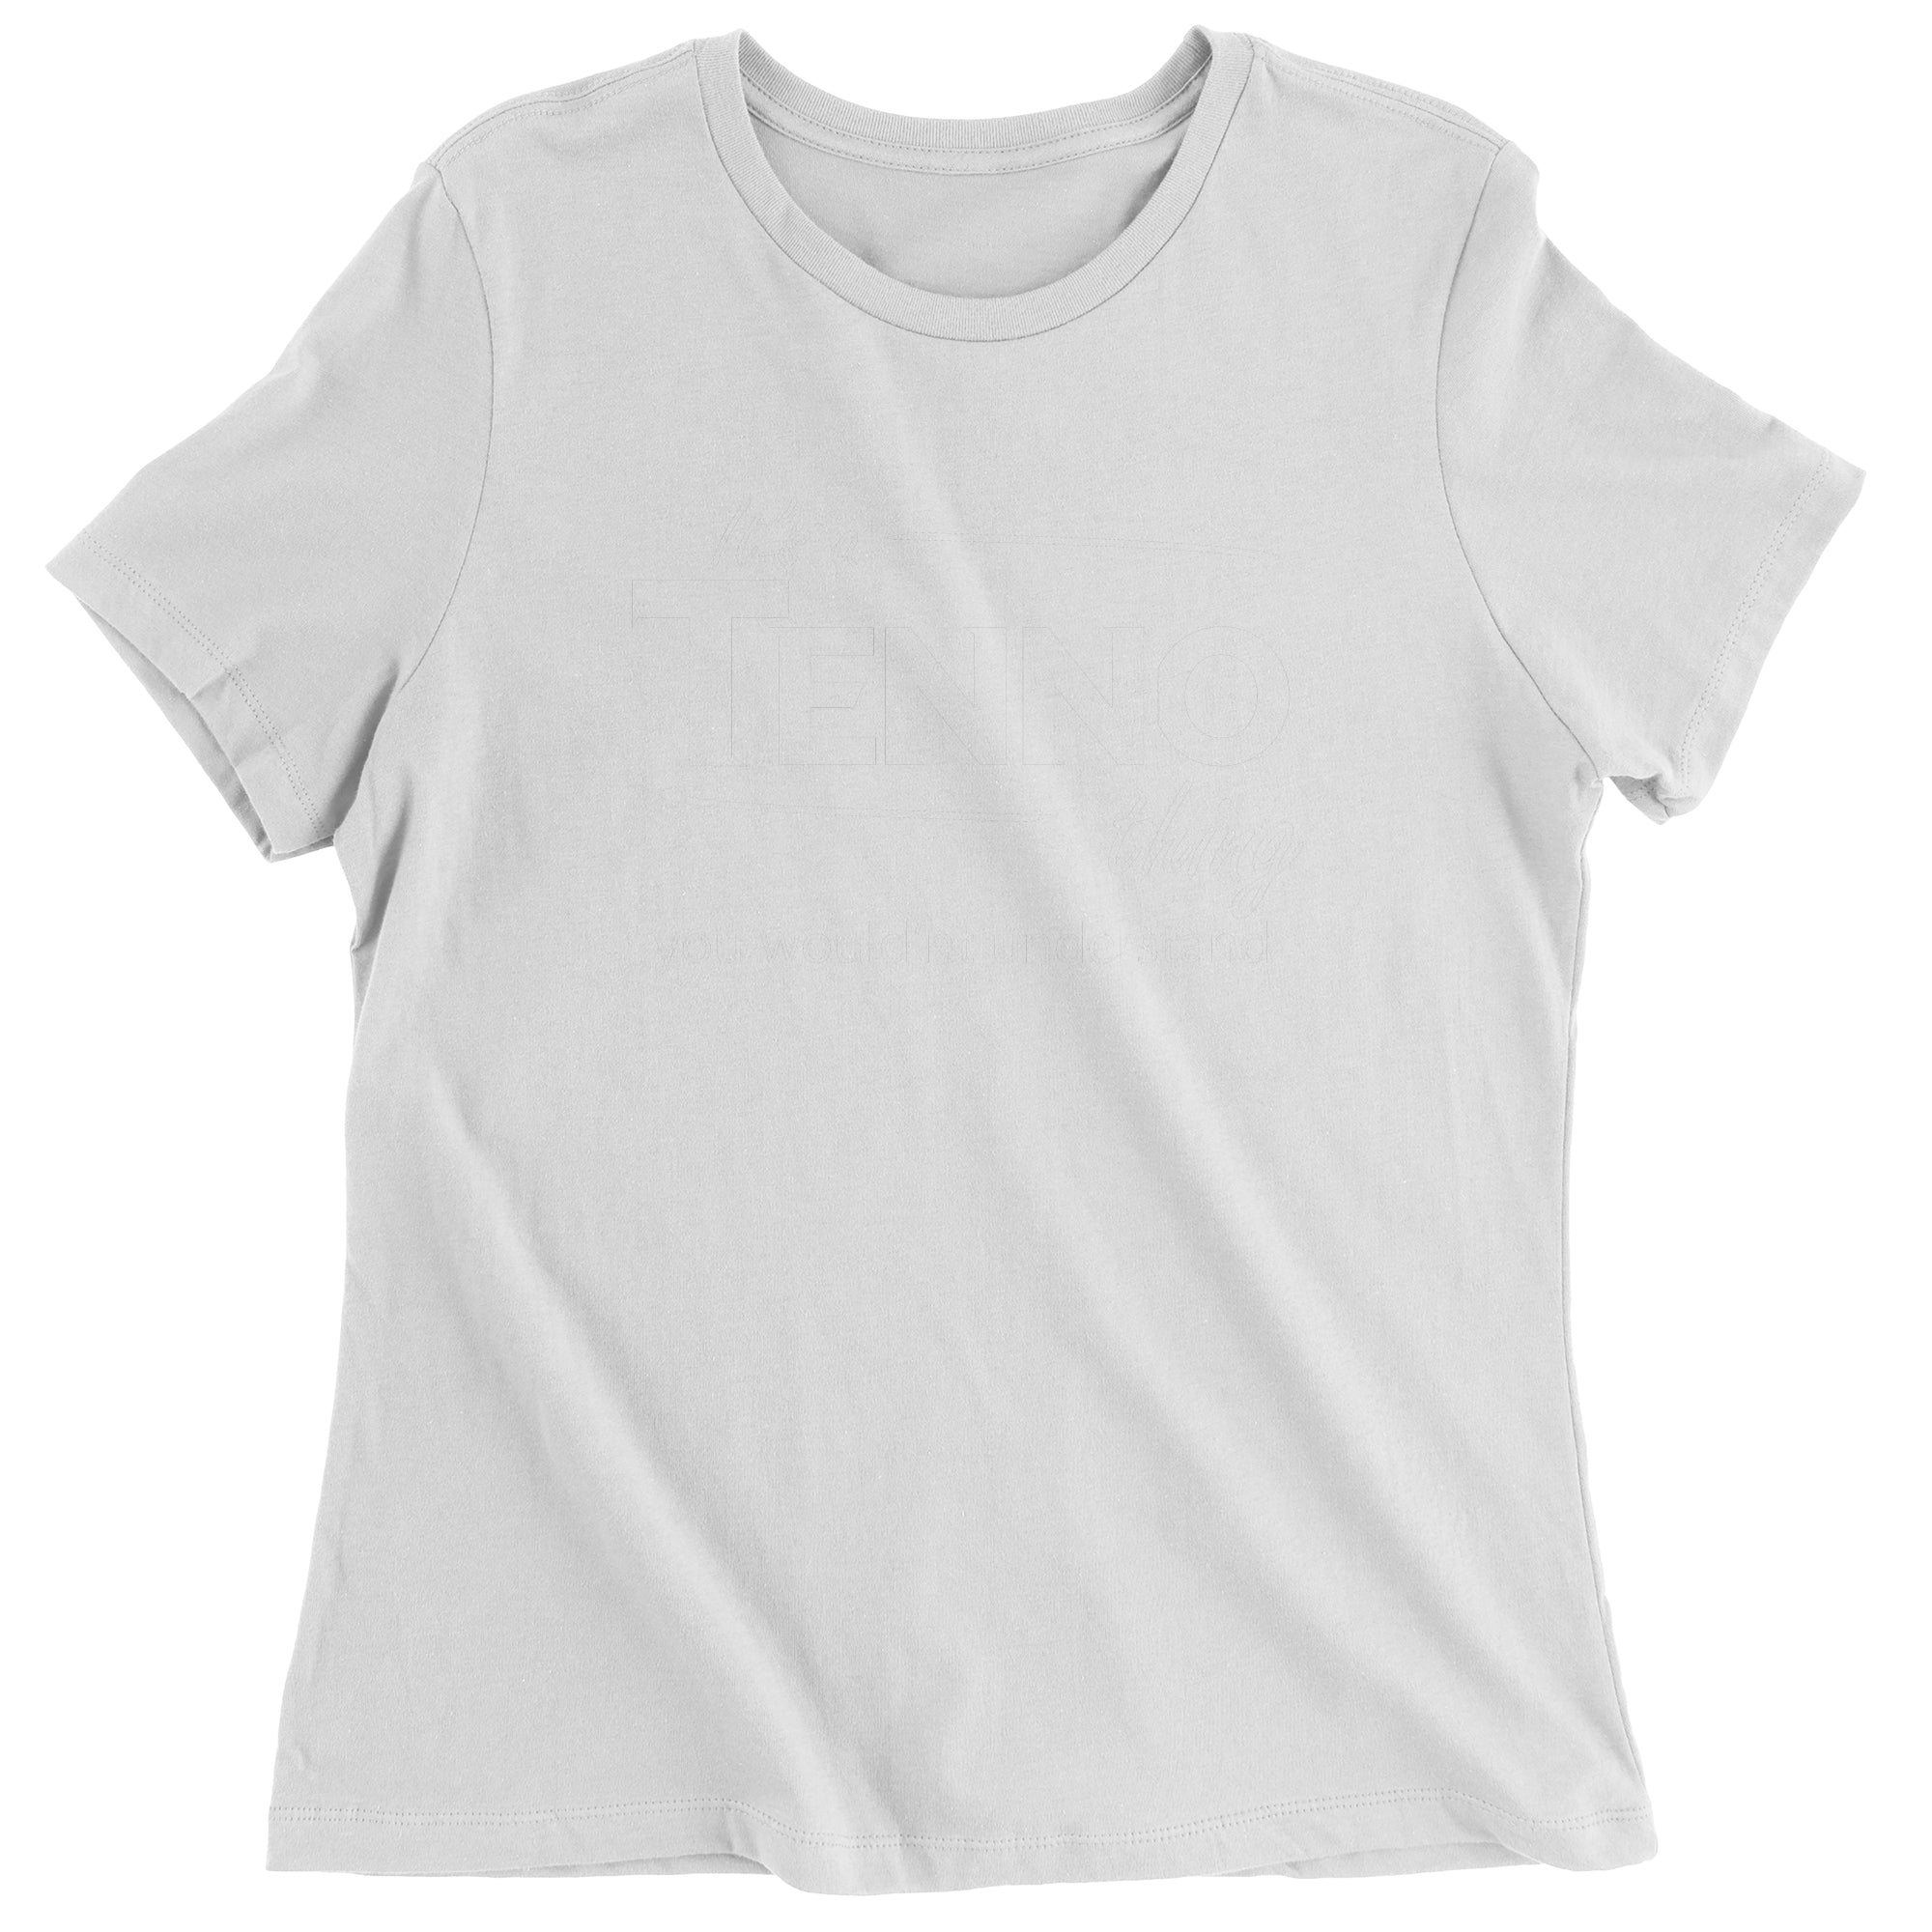 Tenno Race Gamer Women's T-Shirt